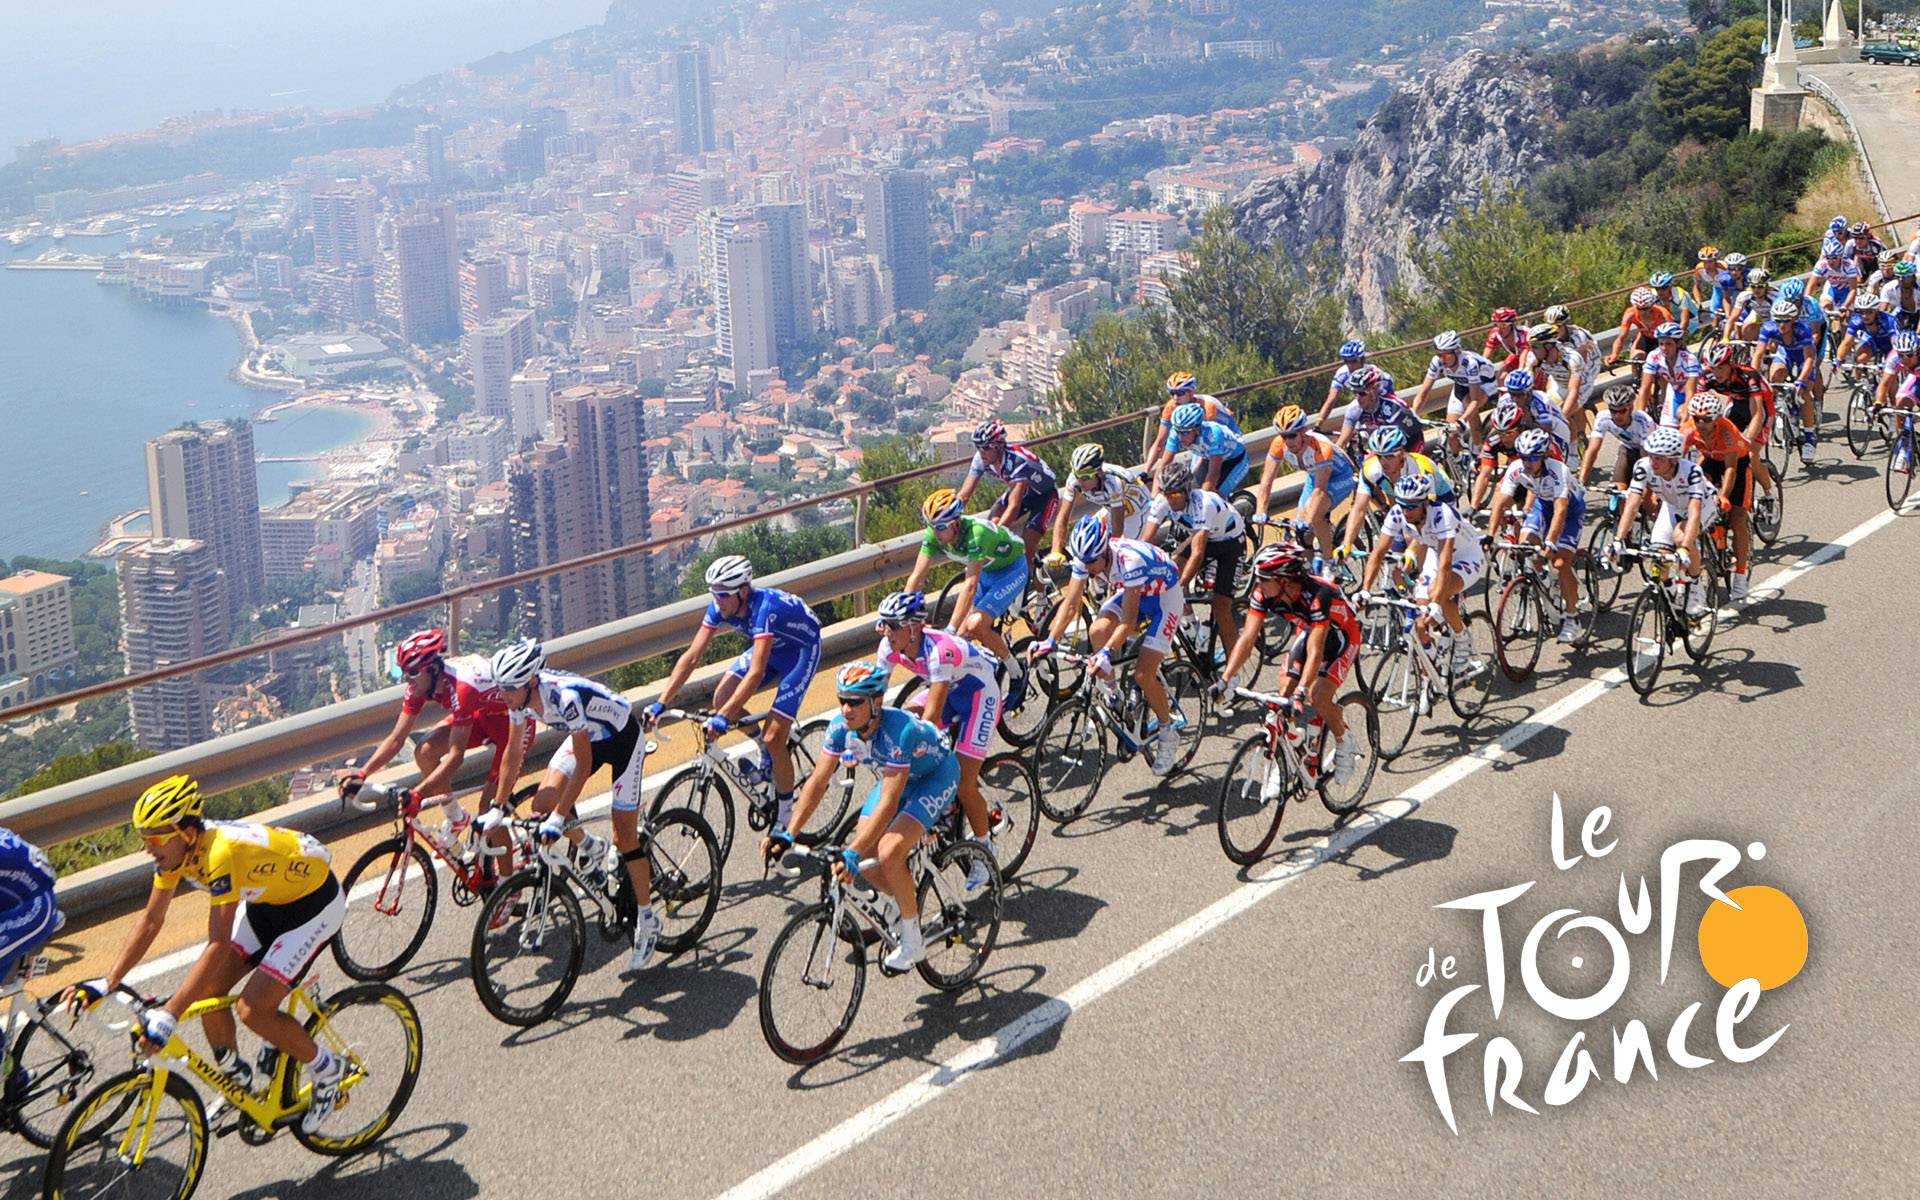 Tour de france wallpaper. Bicycling photo. Sport wallpaper